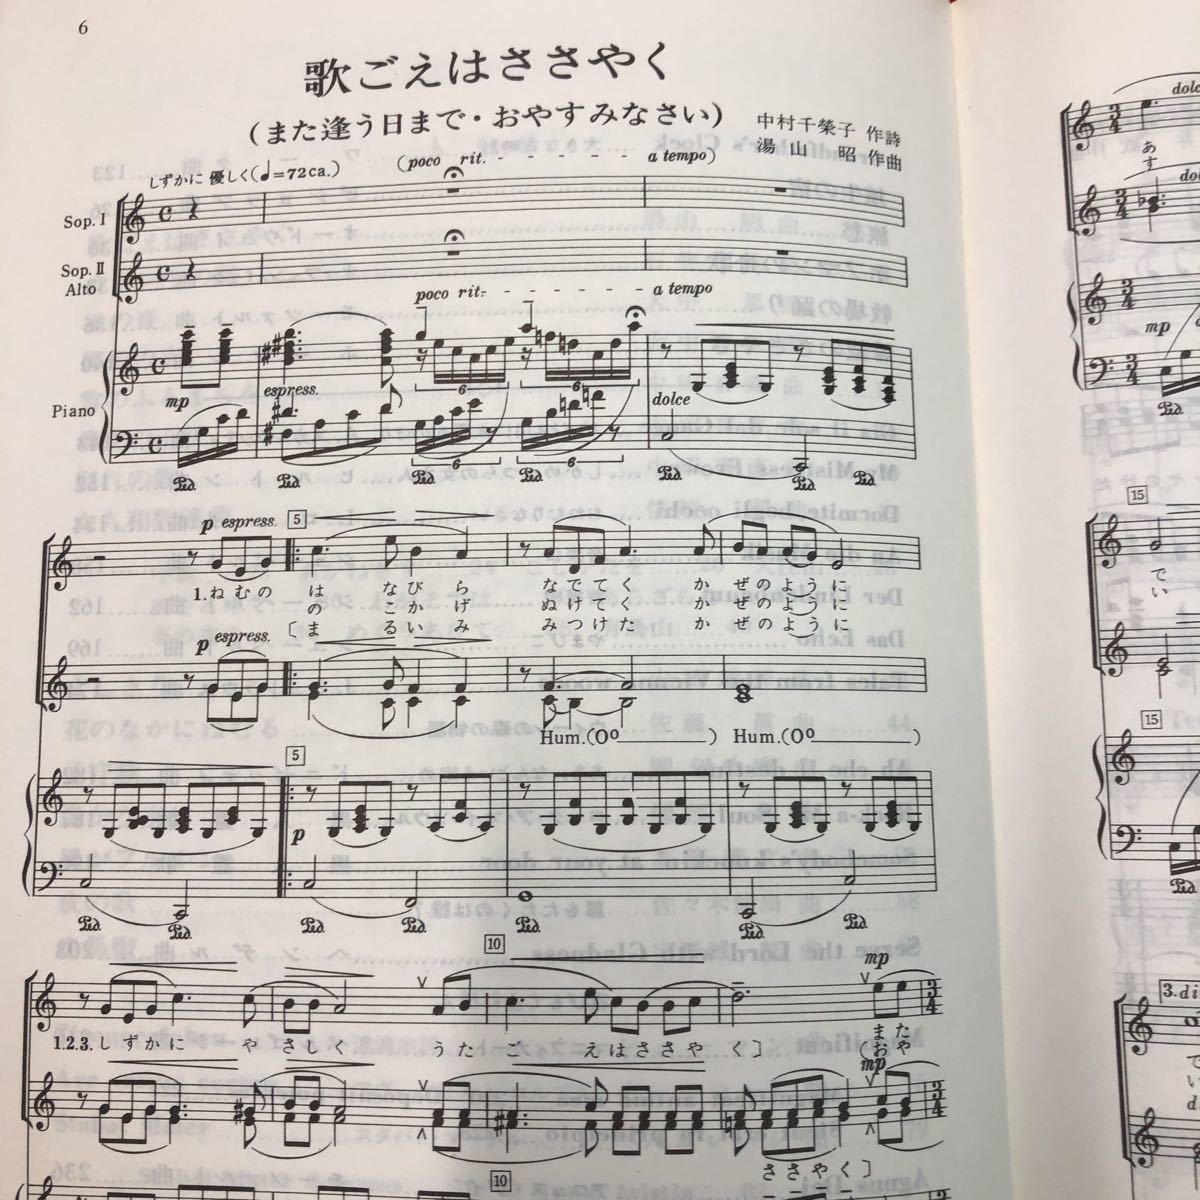 S6h-201 カワイ・リーダーシャッツ 女声合唱第2巻 編者 日本合唱指揮者協会 昭和61年3月1日 第2刷発行 河合楽器製作所 音楽 合唱 楽譜_画像5